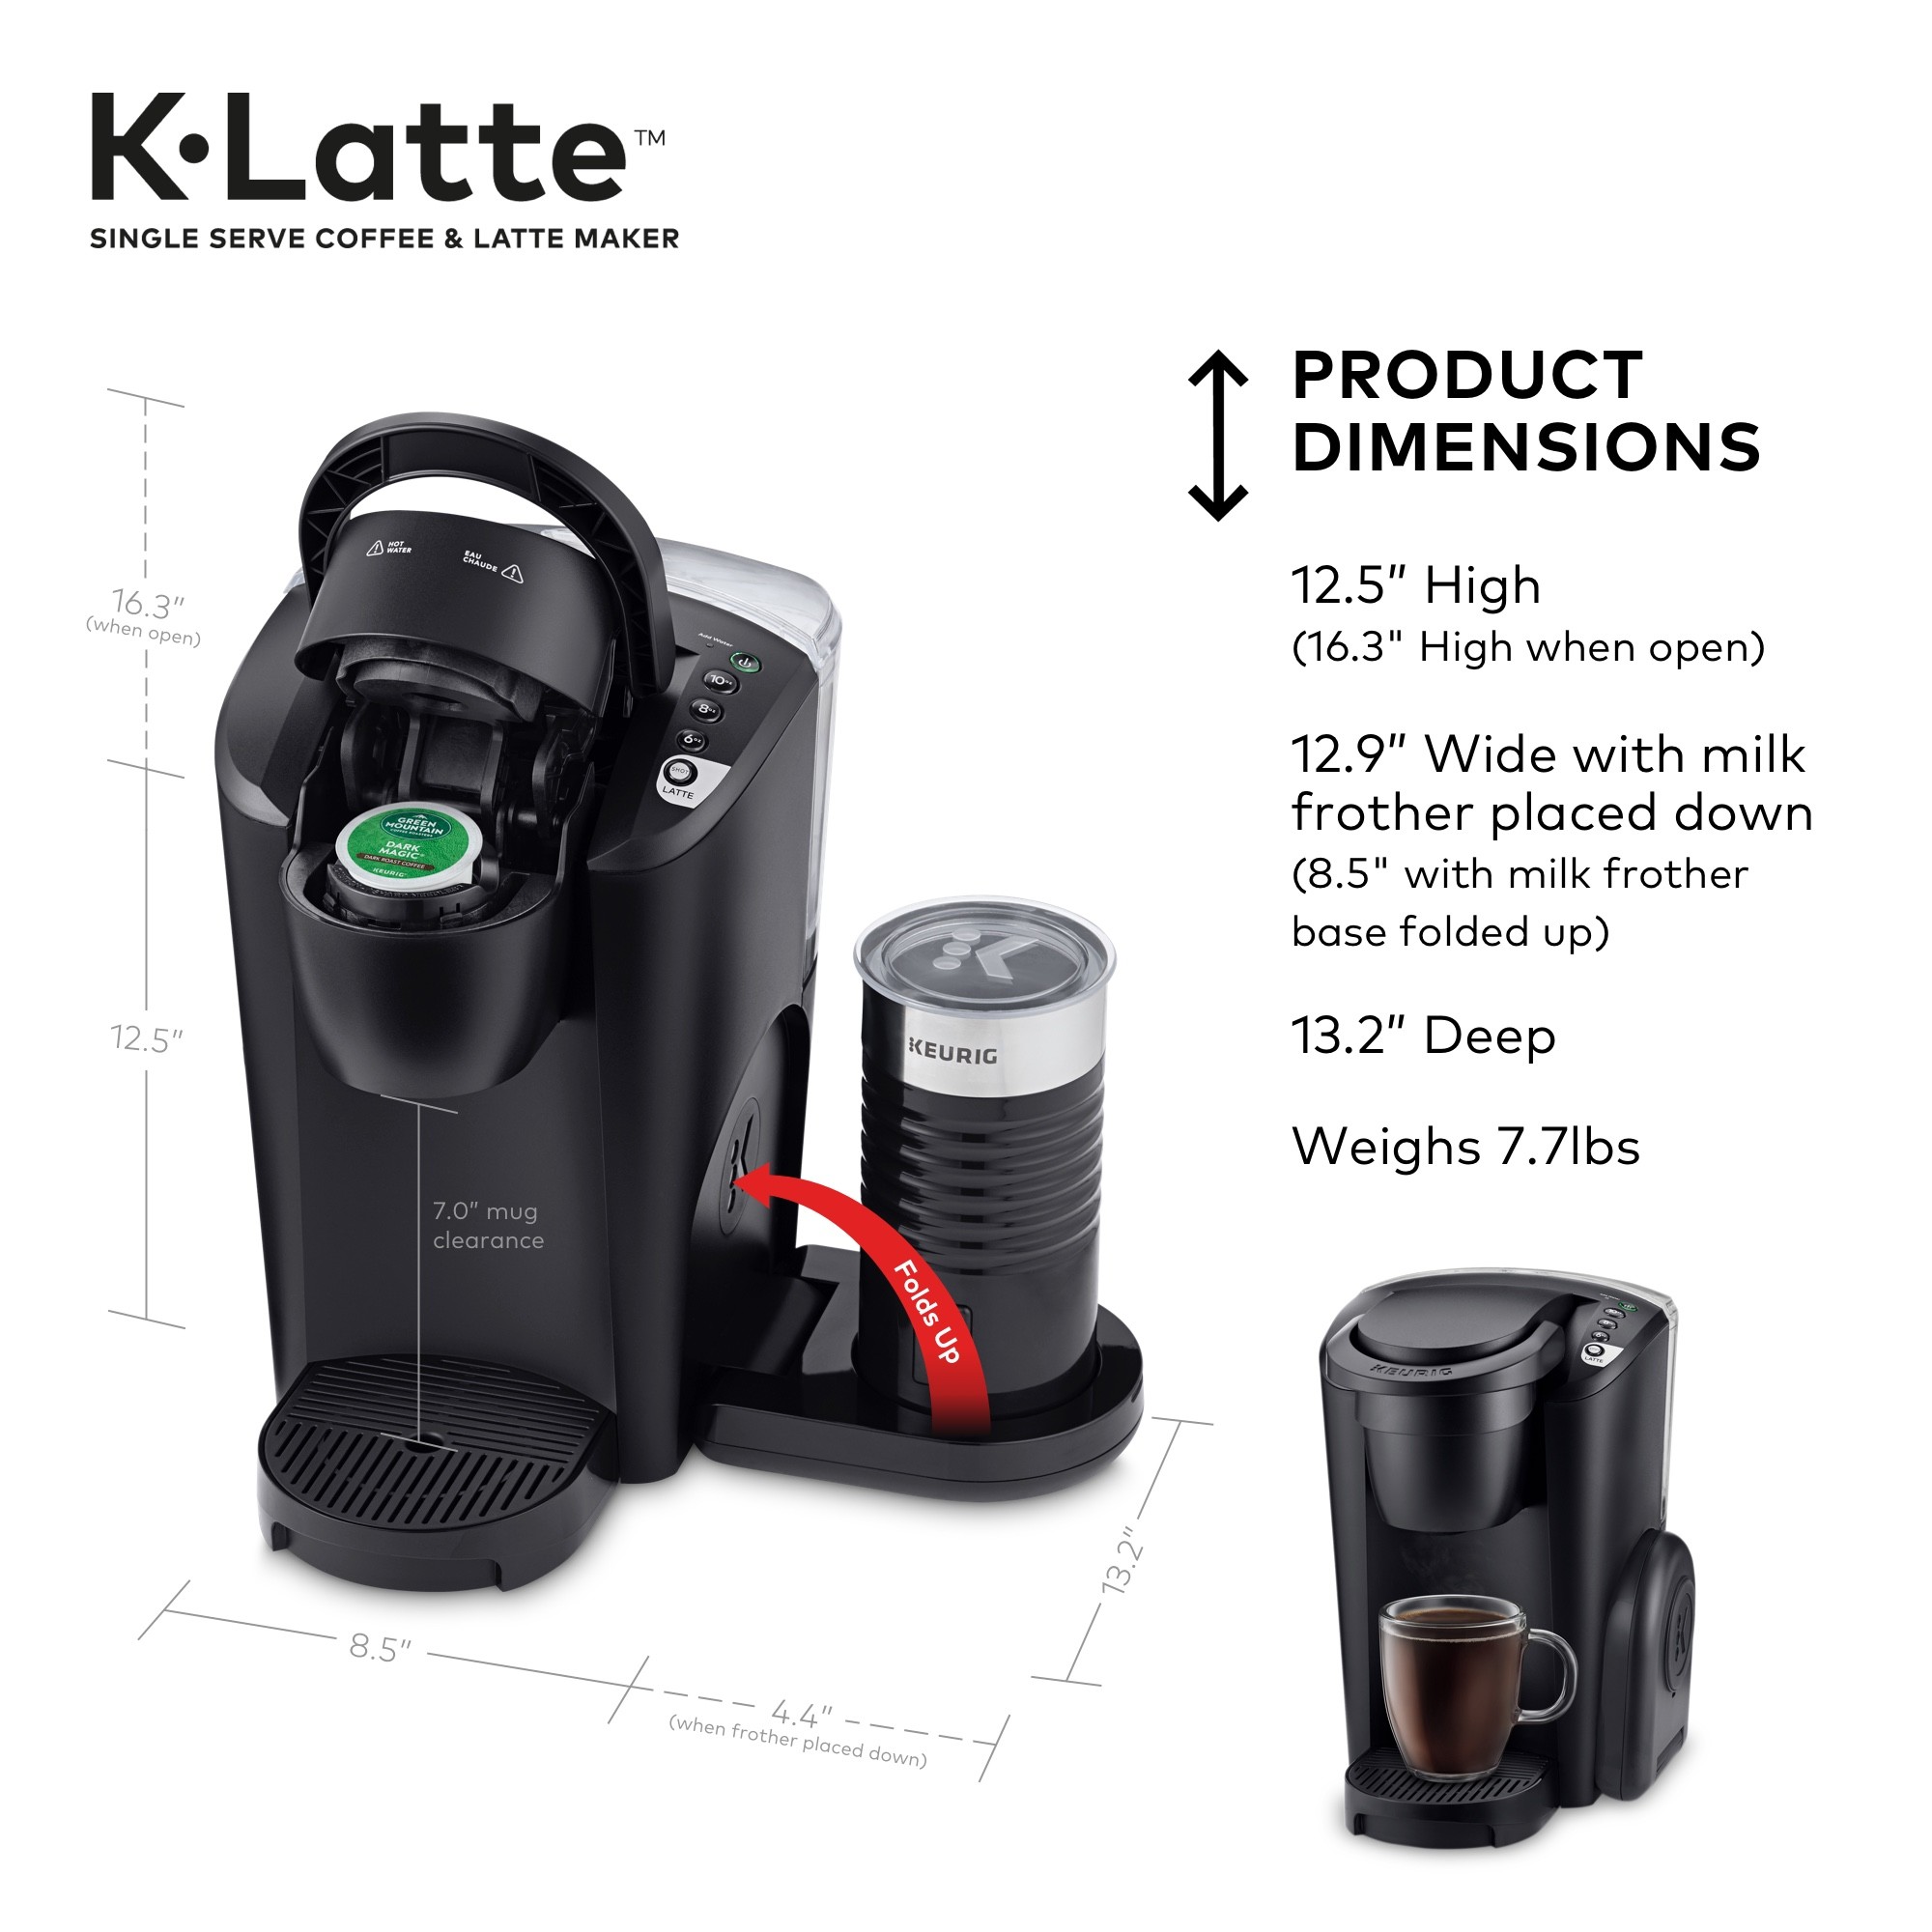 Keurig K-Latte Single Serve K-Cup Coffee and Latte Maker, Black - image 6 of 12